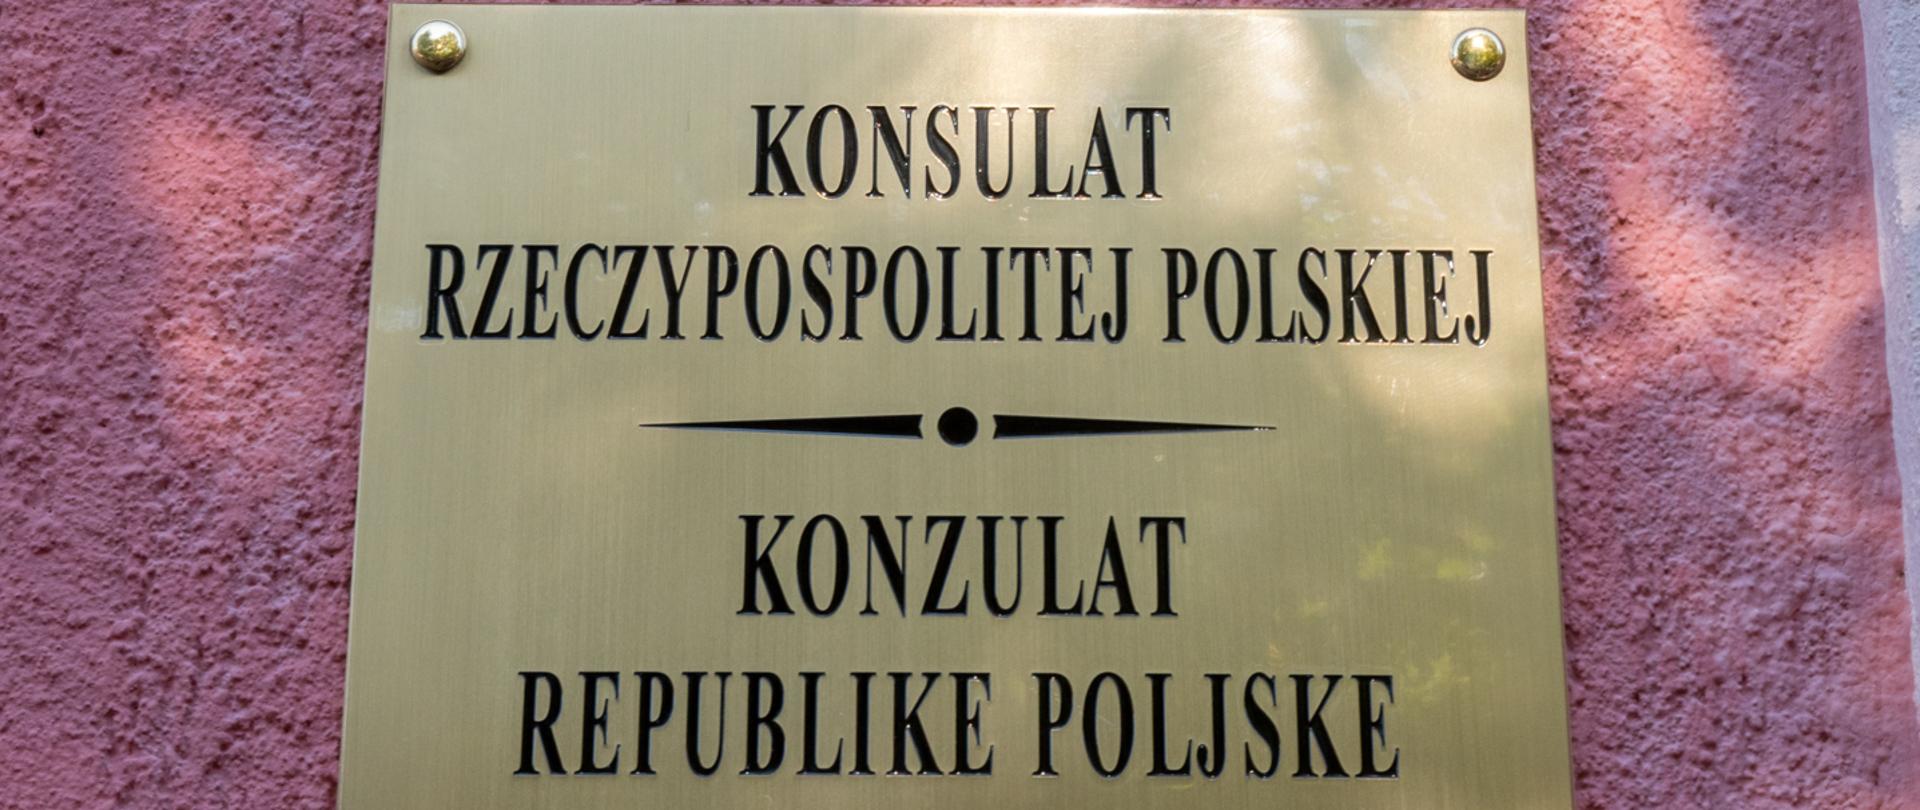 Počasni konzulat Poljske u Mostaru (fot. Mustafa Stupac), Creative Commons Attribution 3.0 PL